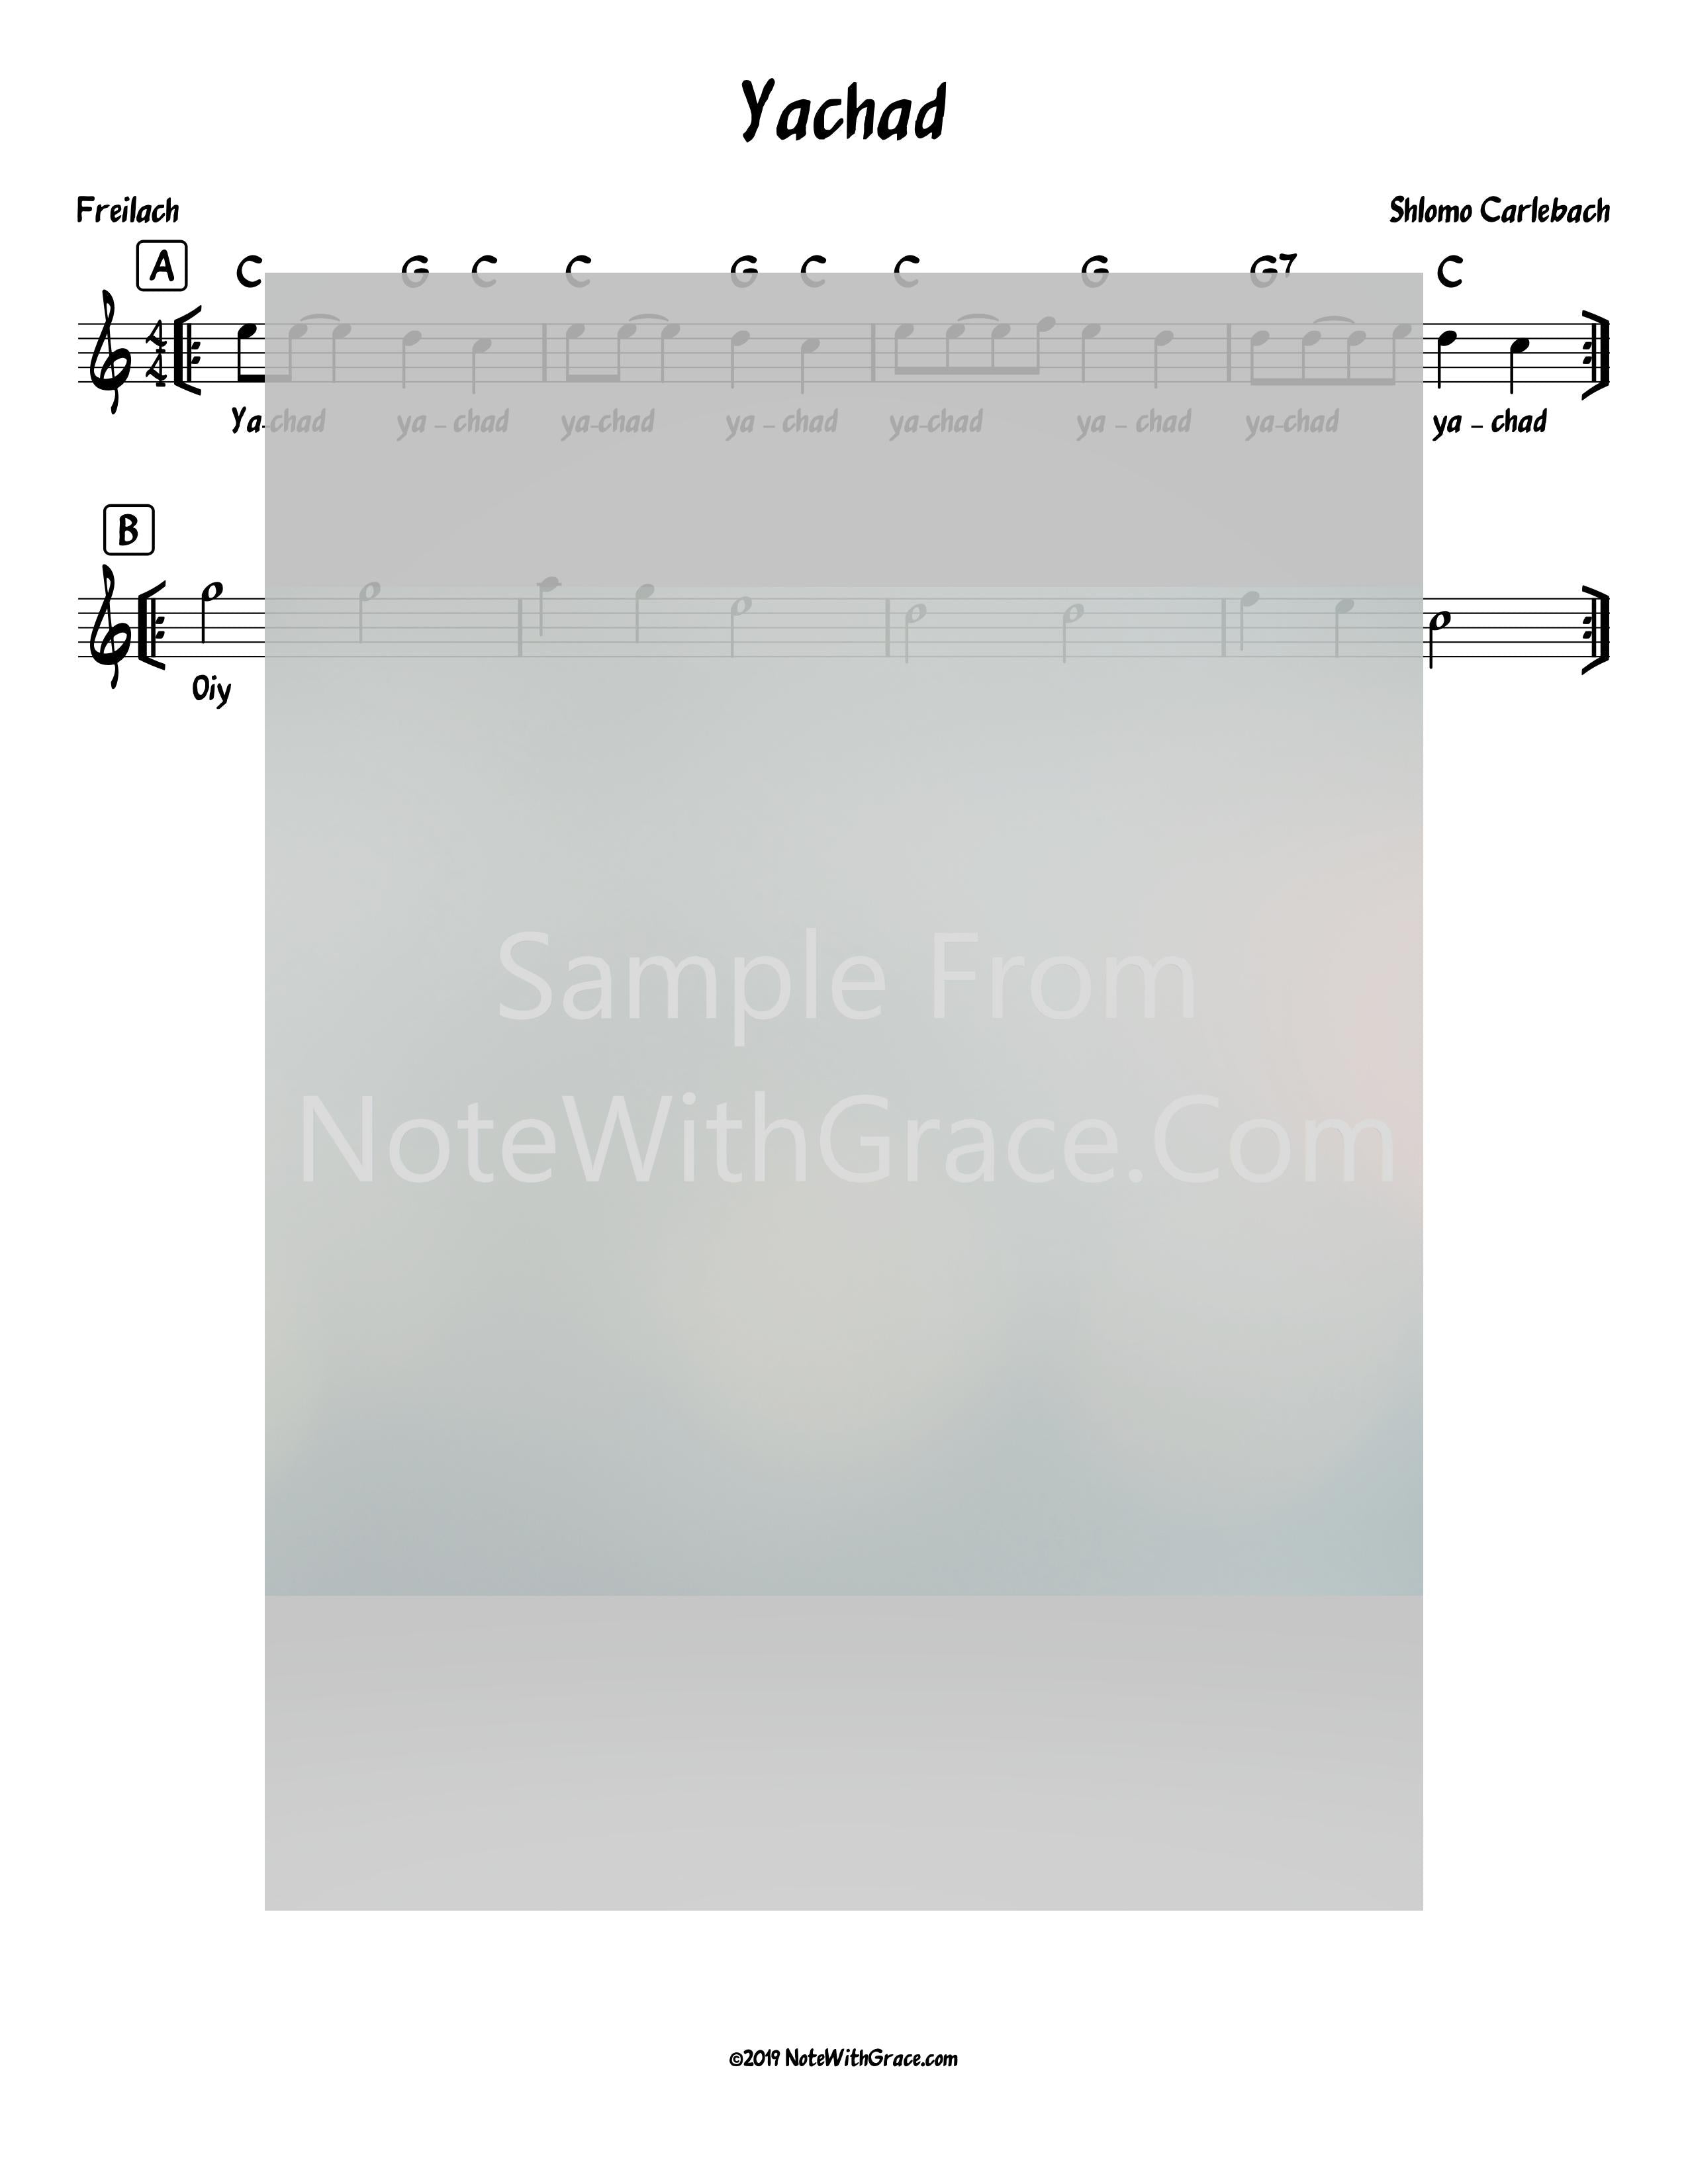 Yachad Lead Sheet (Shlomo Carlbach)-Sheet music-NoteWithGrace.com